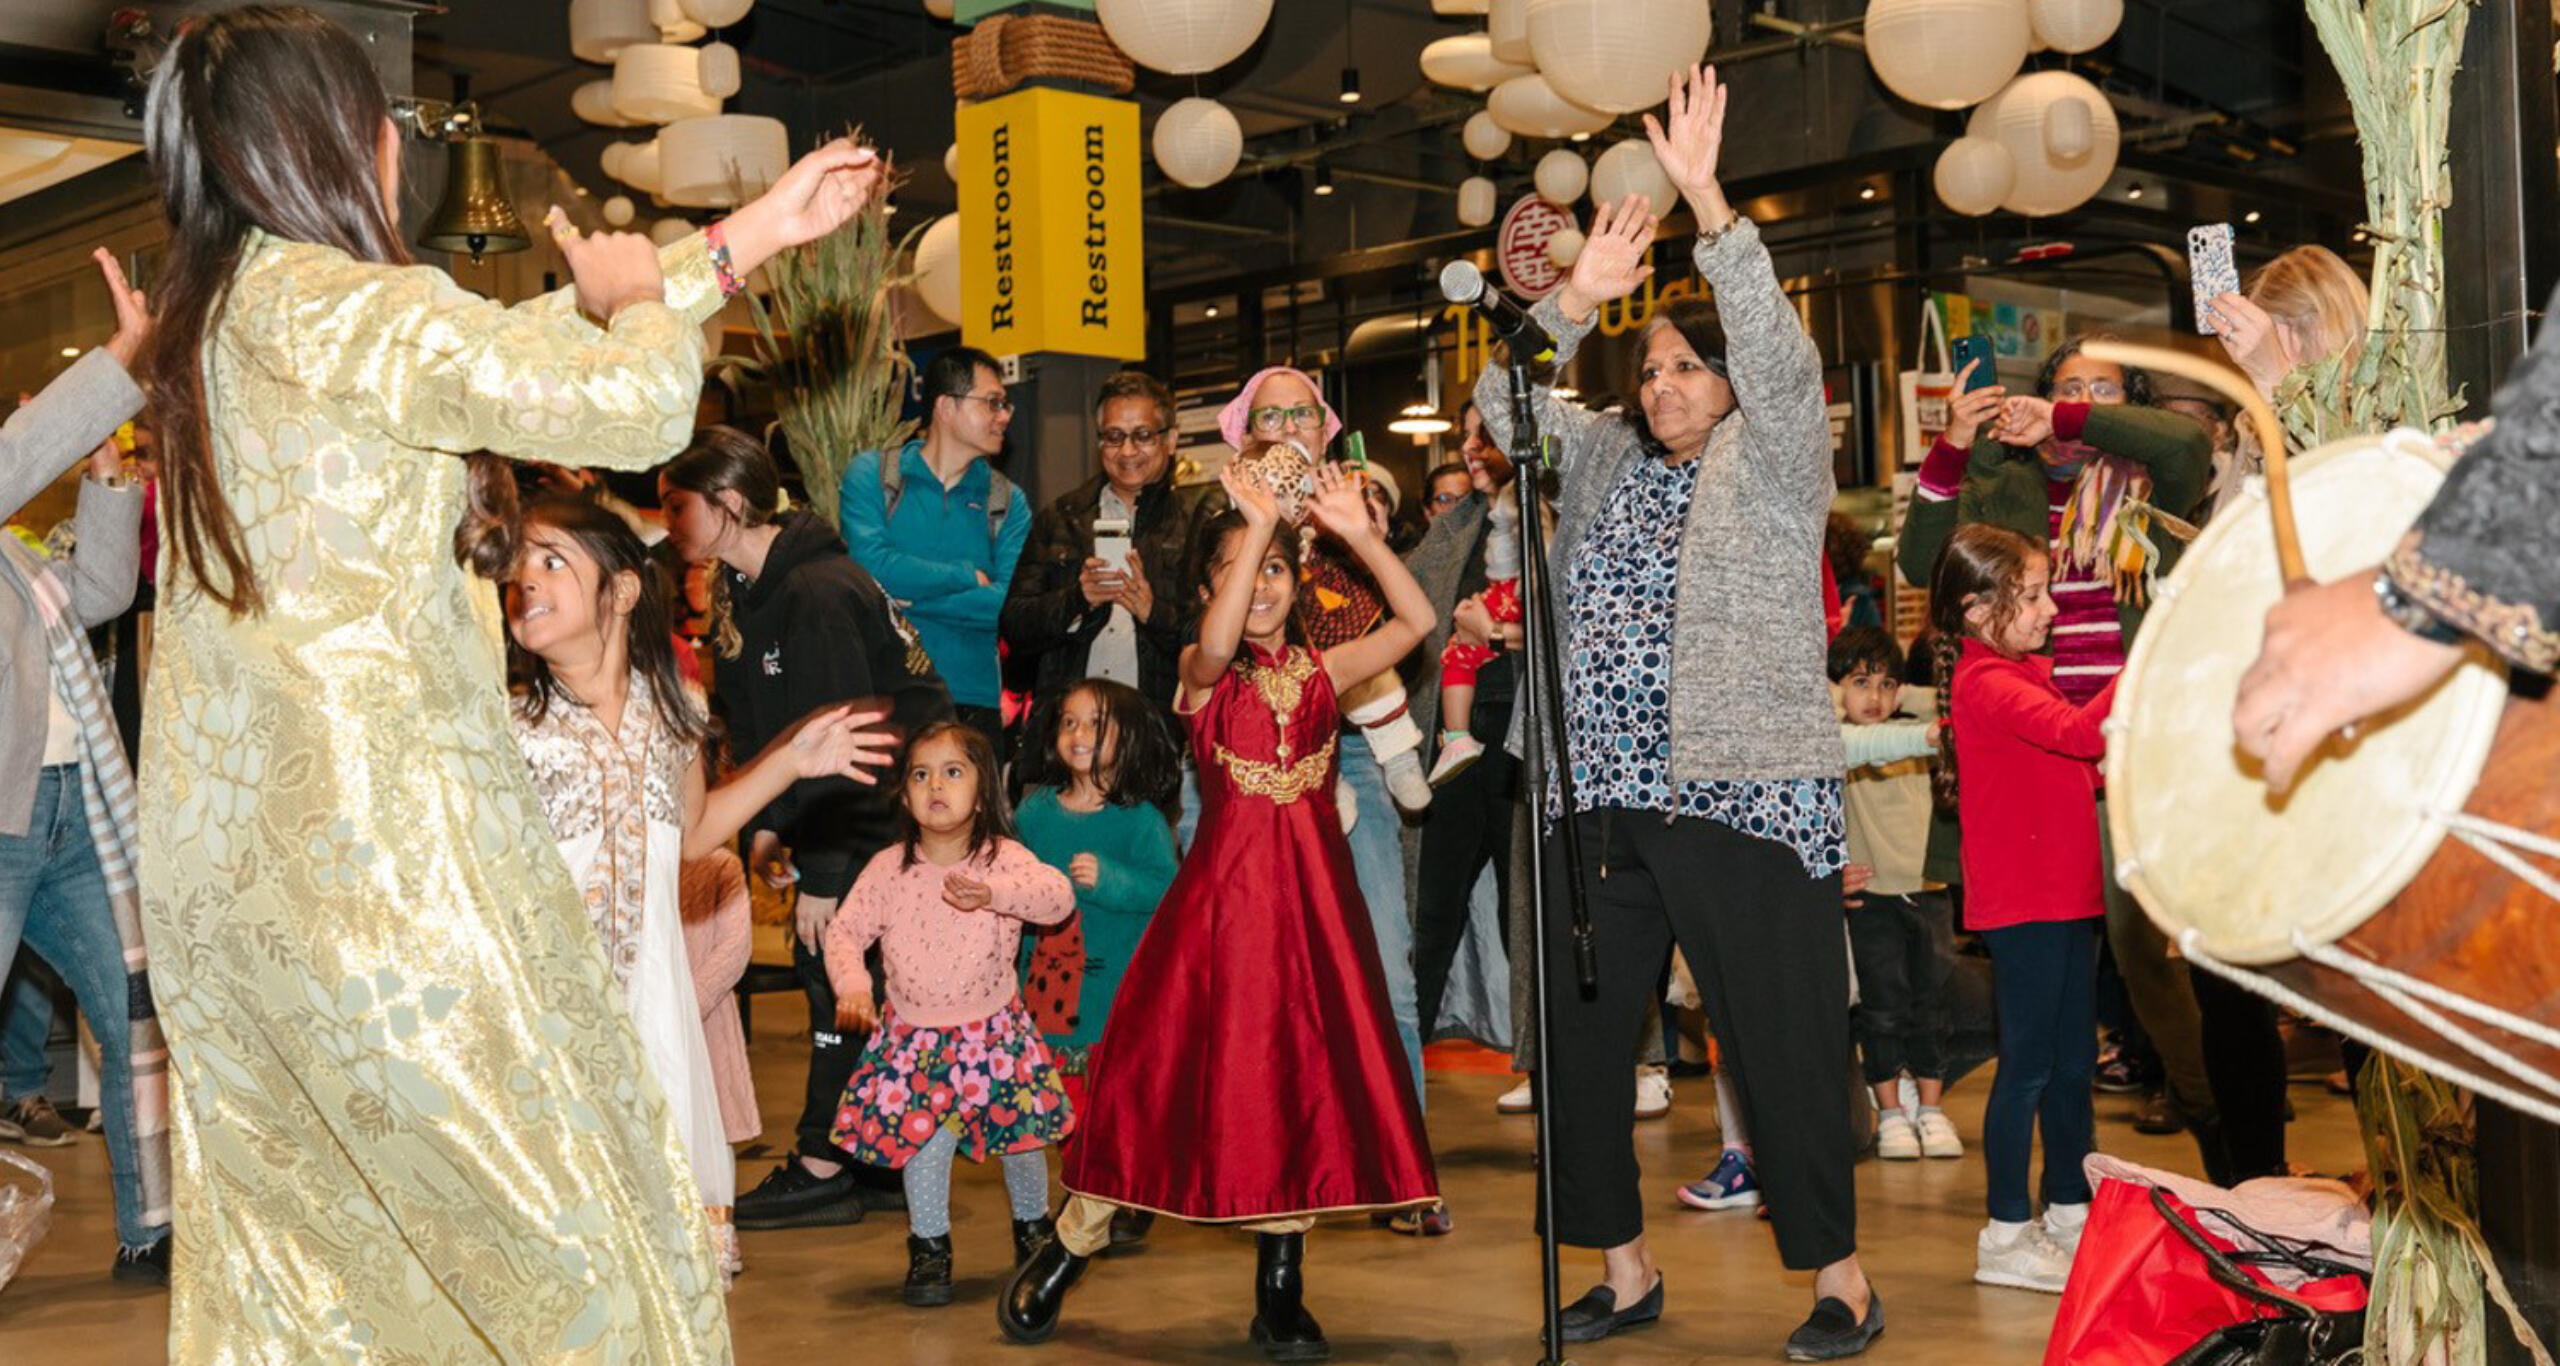 A multi-generational group dancing to celebrate Diwali inside Pier 57